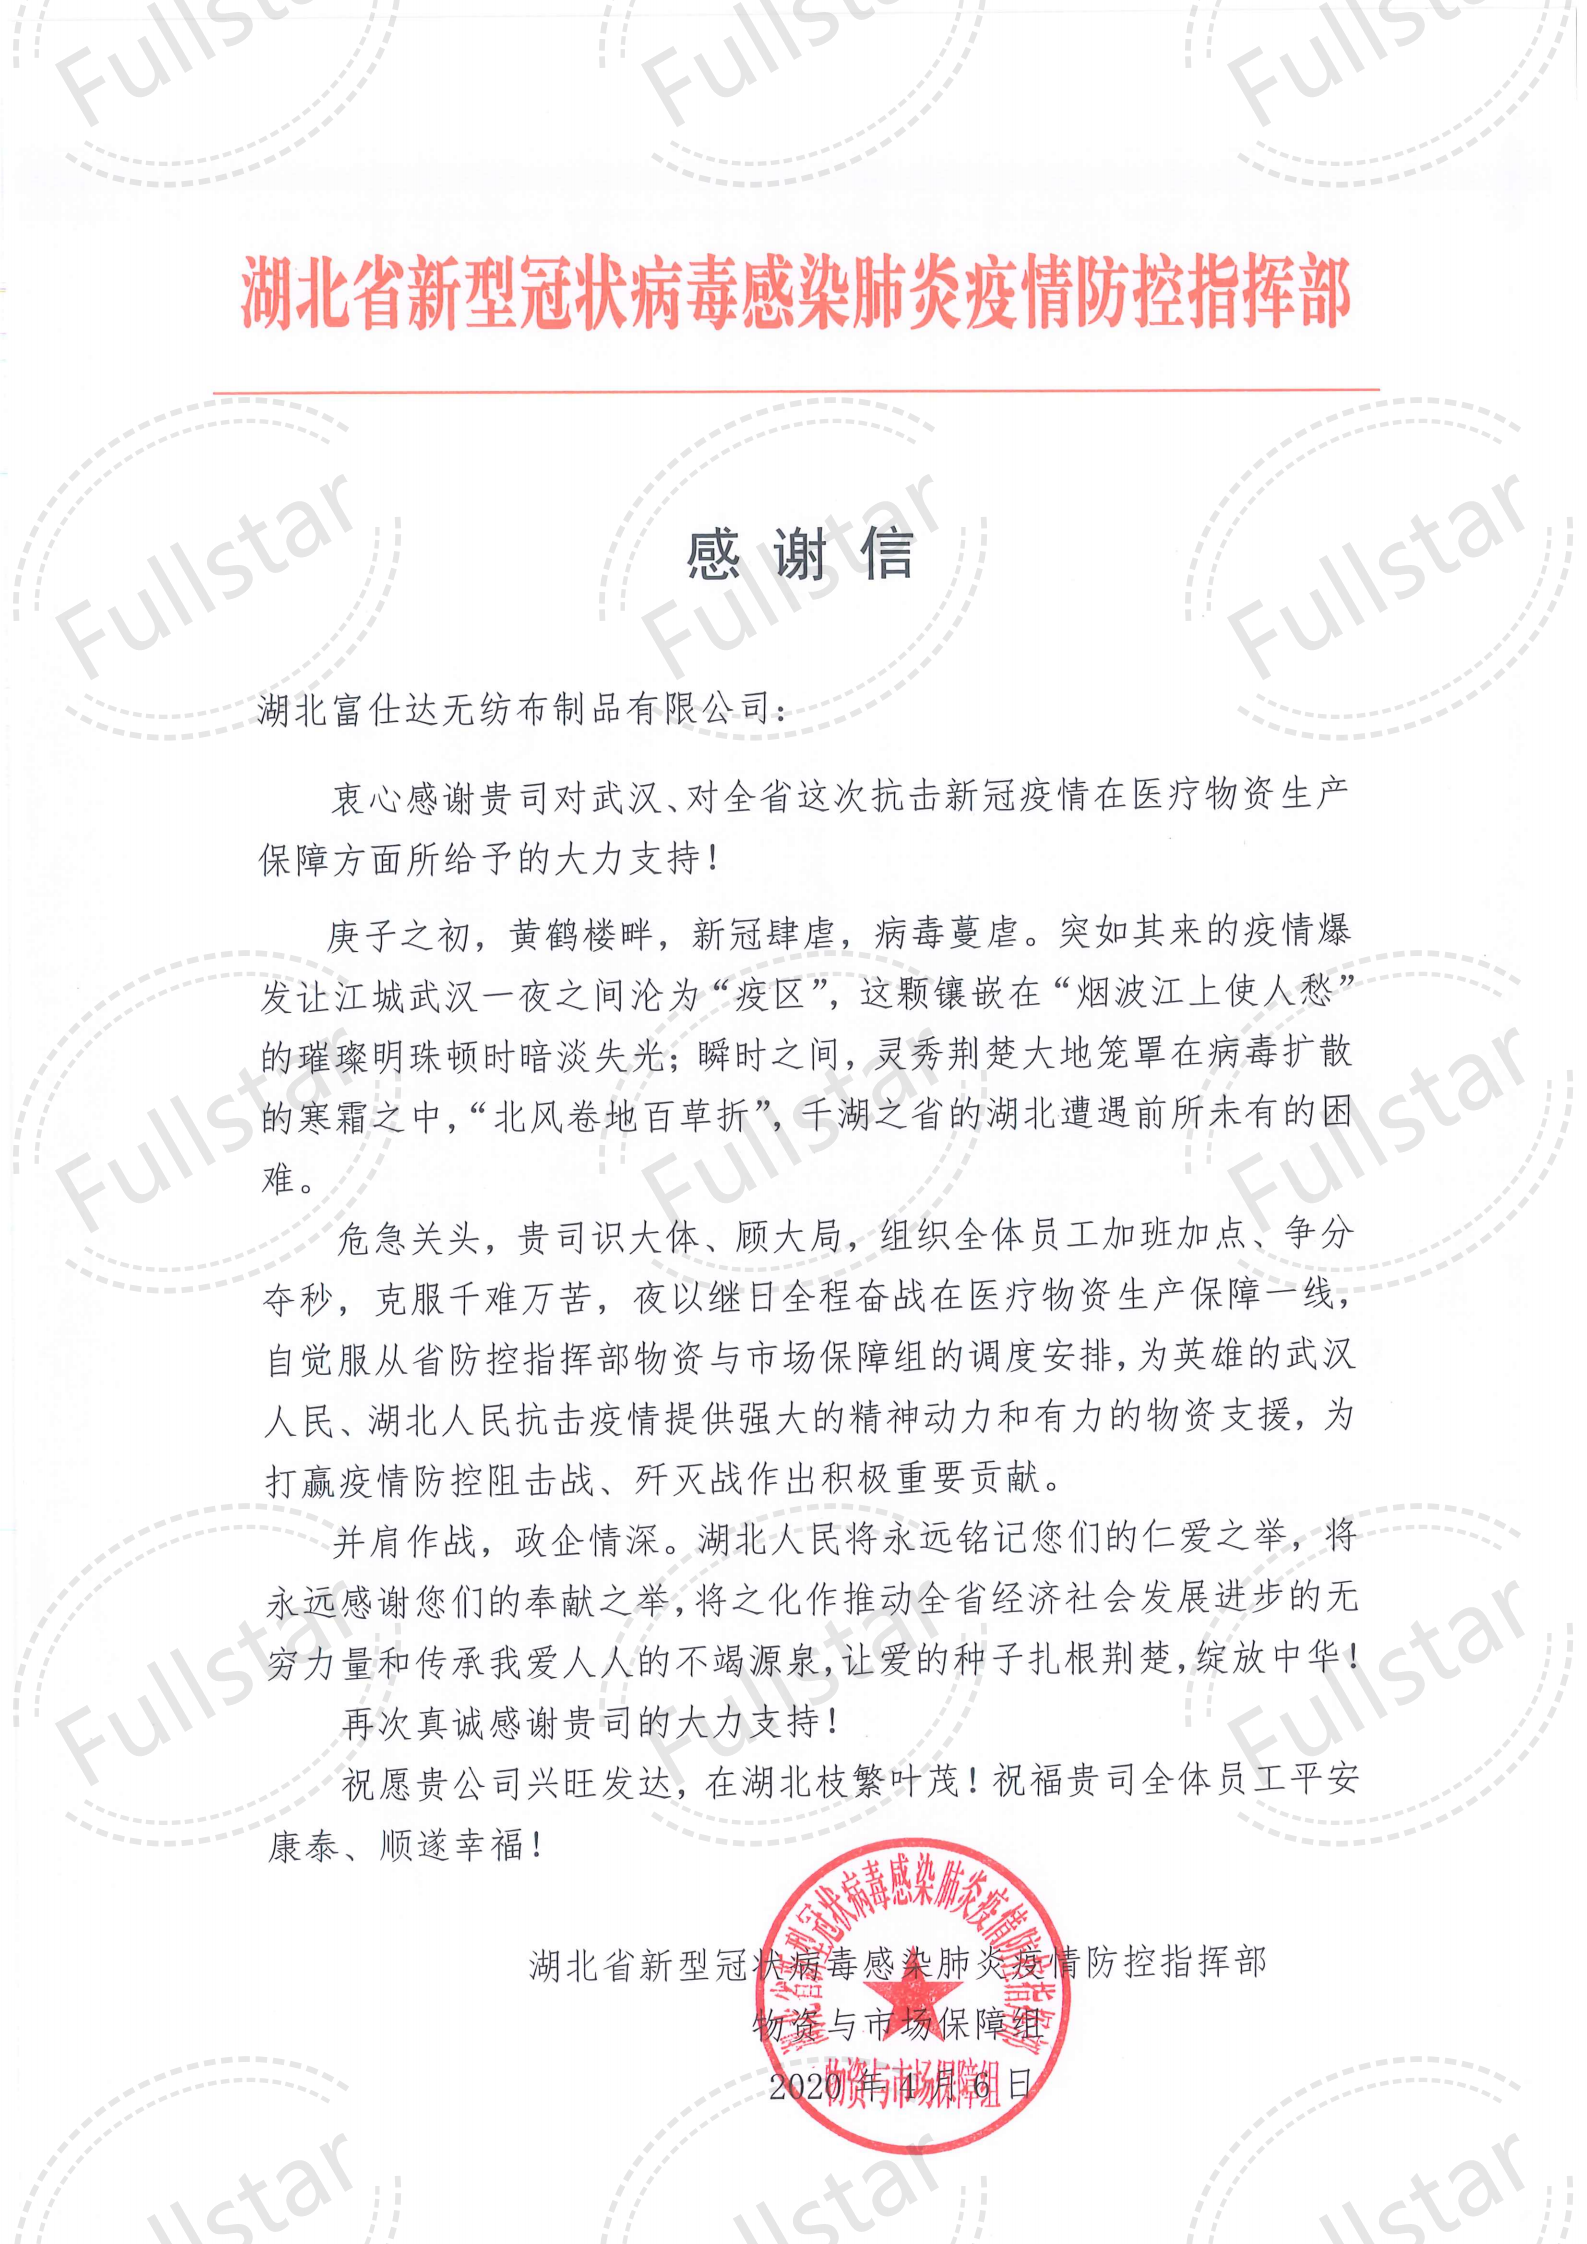 (Hubei Fushida Nonwovens Company) Carta de agradecimento da Sede de Controle Provincial de Hubei_00 (1) .png